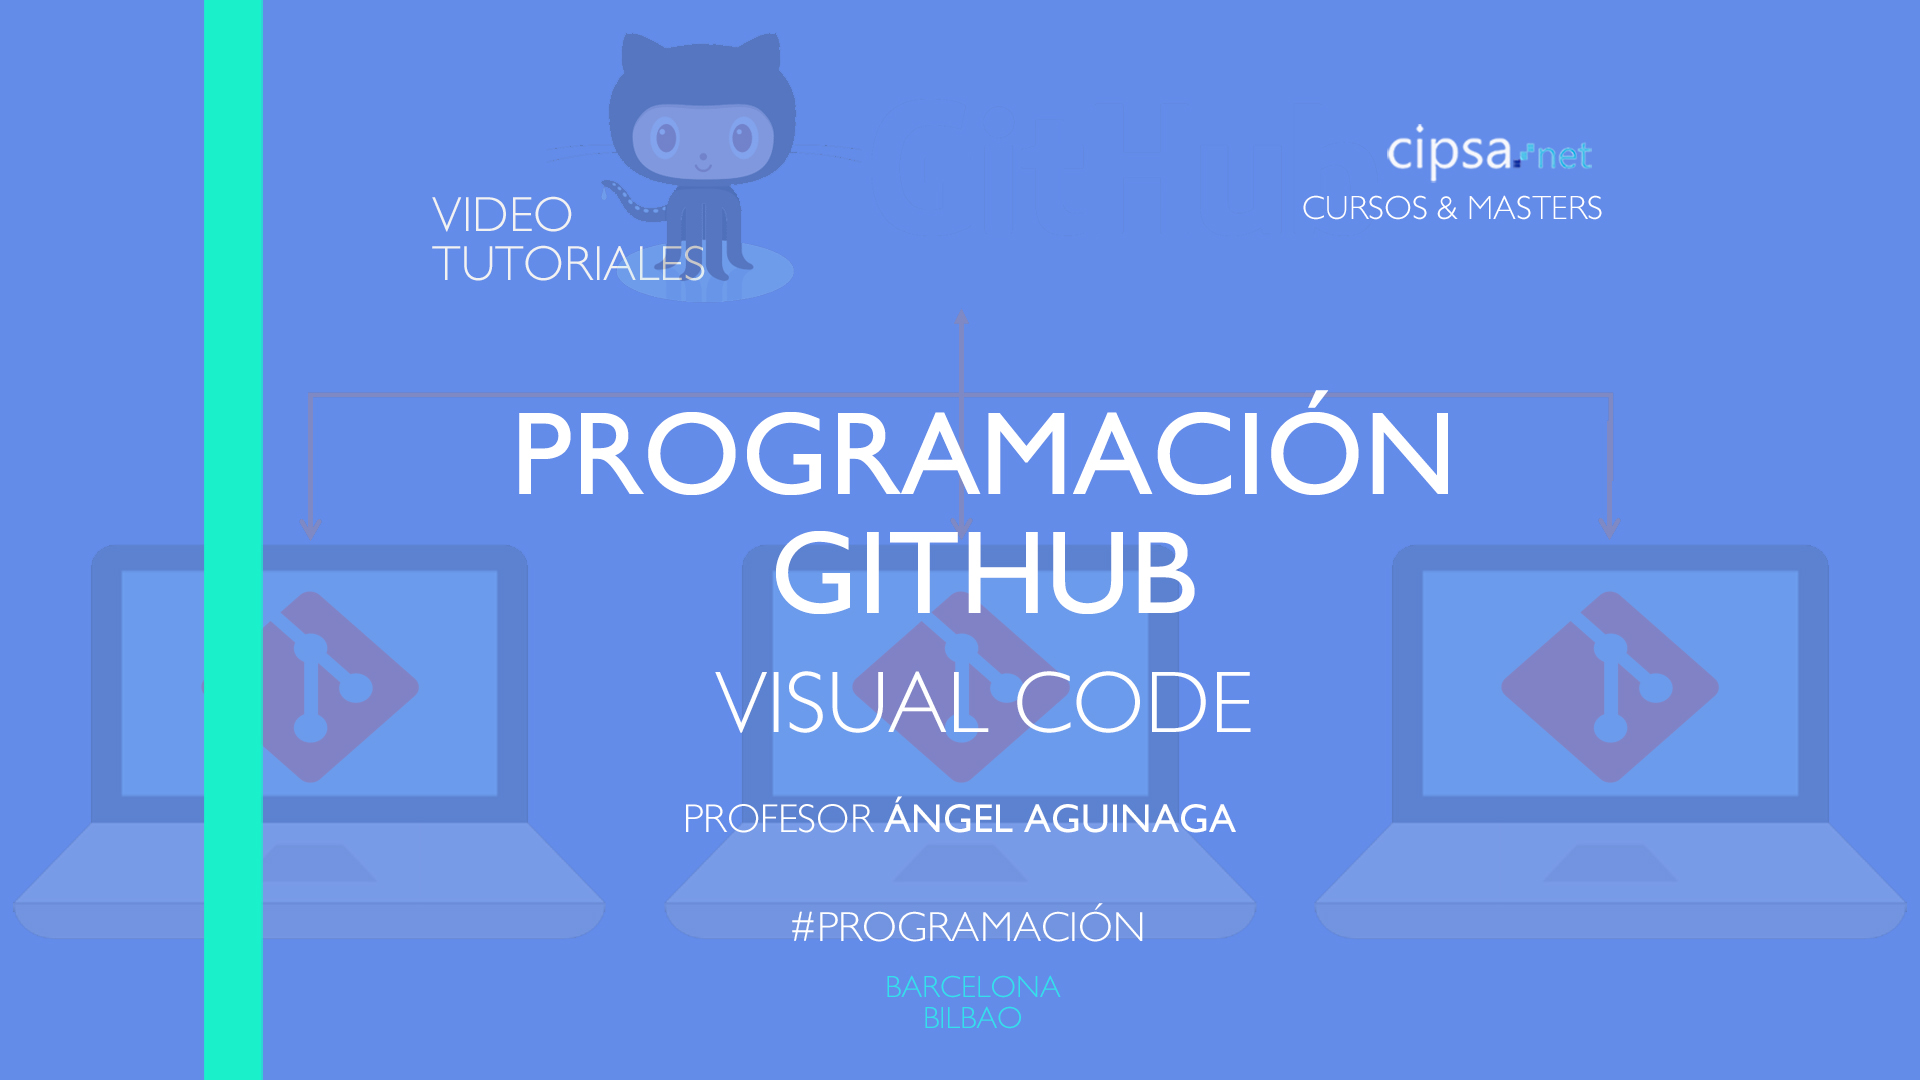 video tutoriales github visual code programación